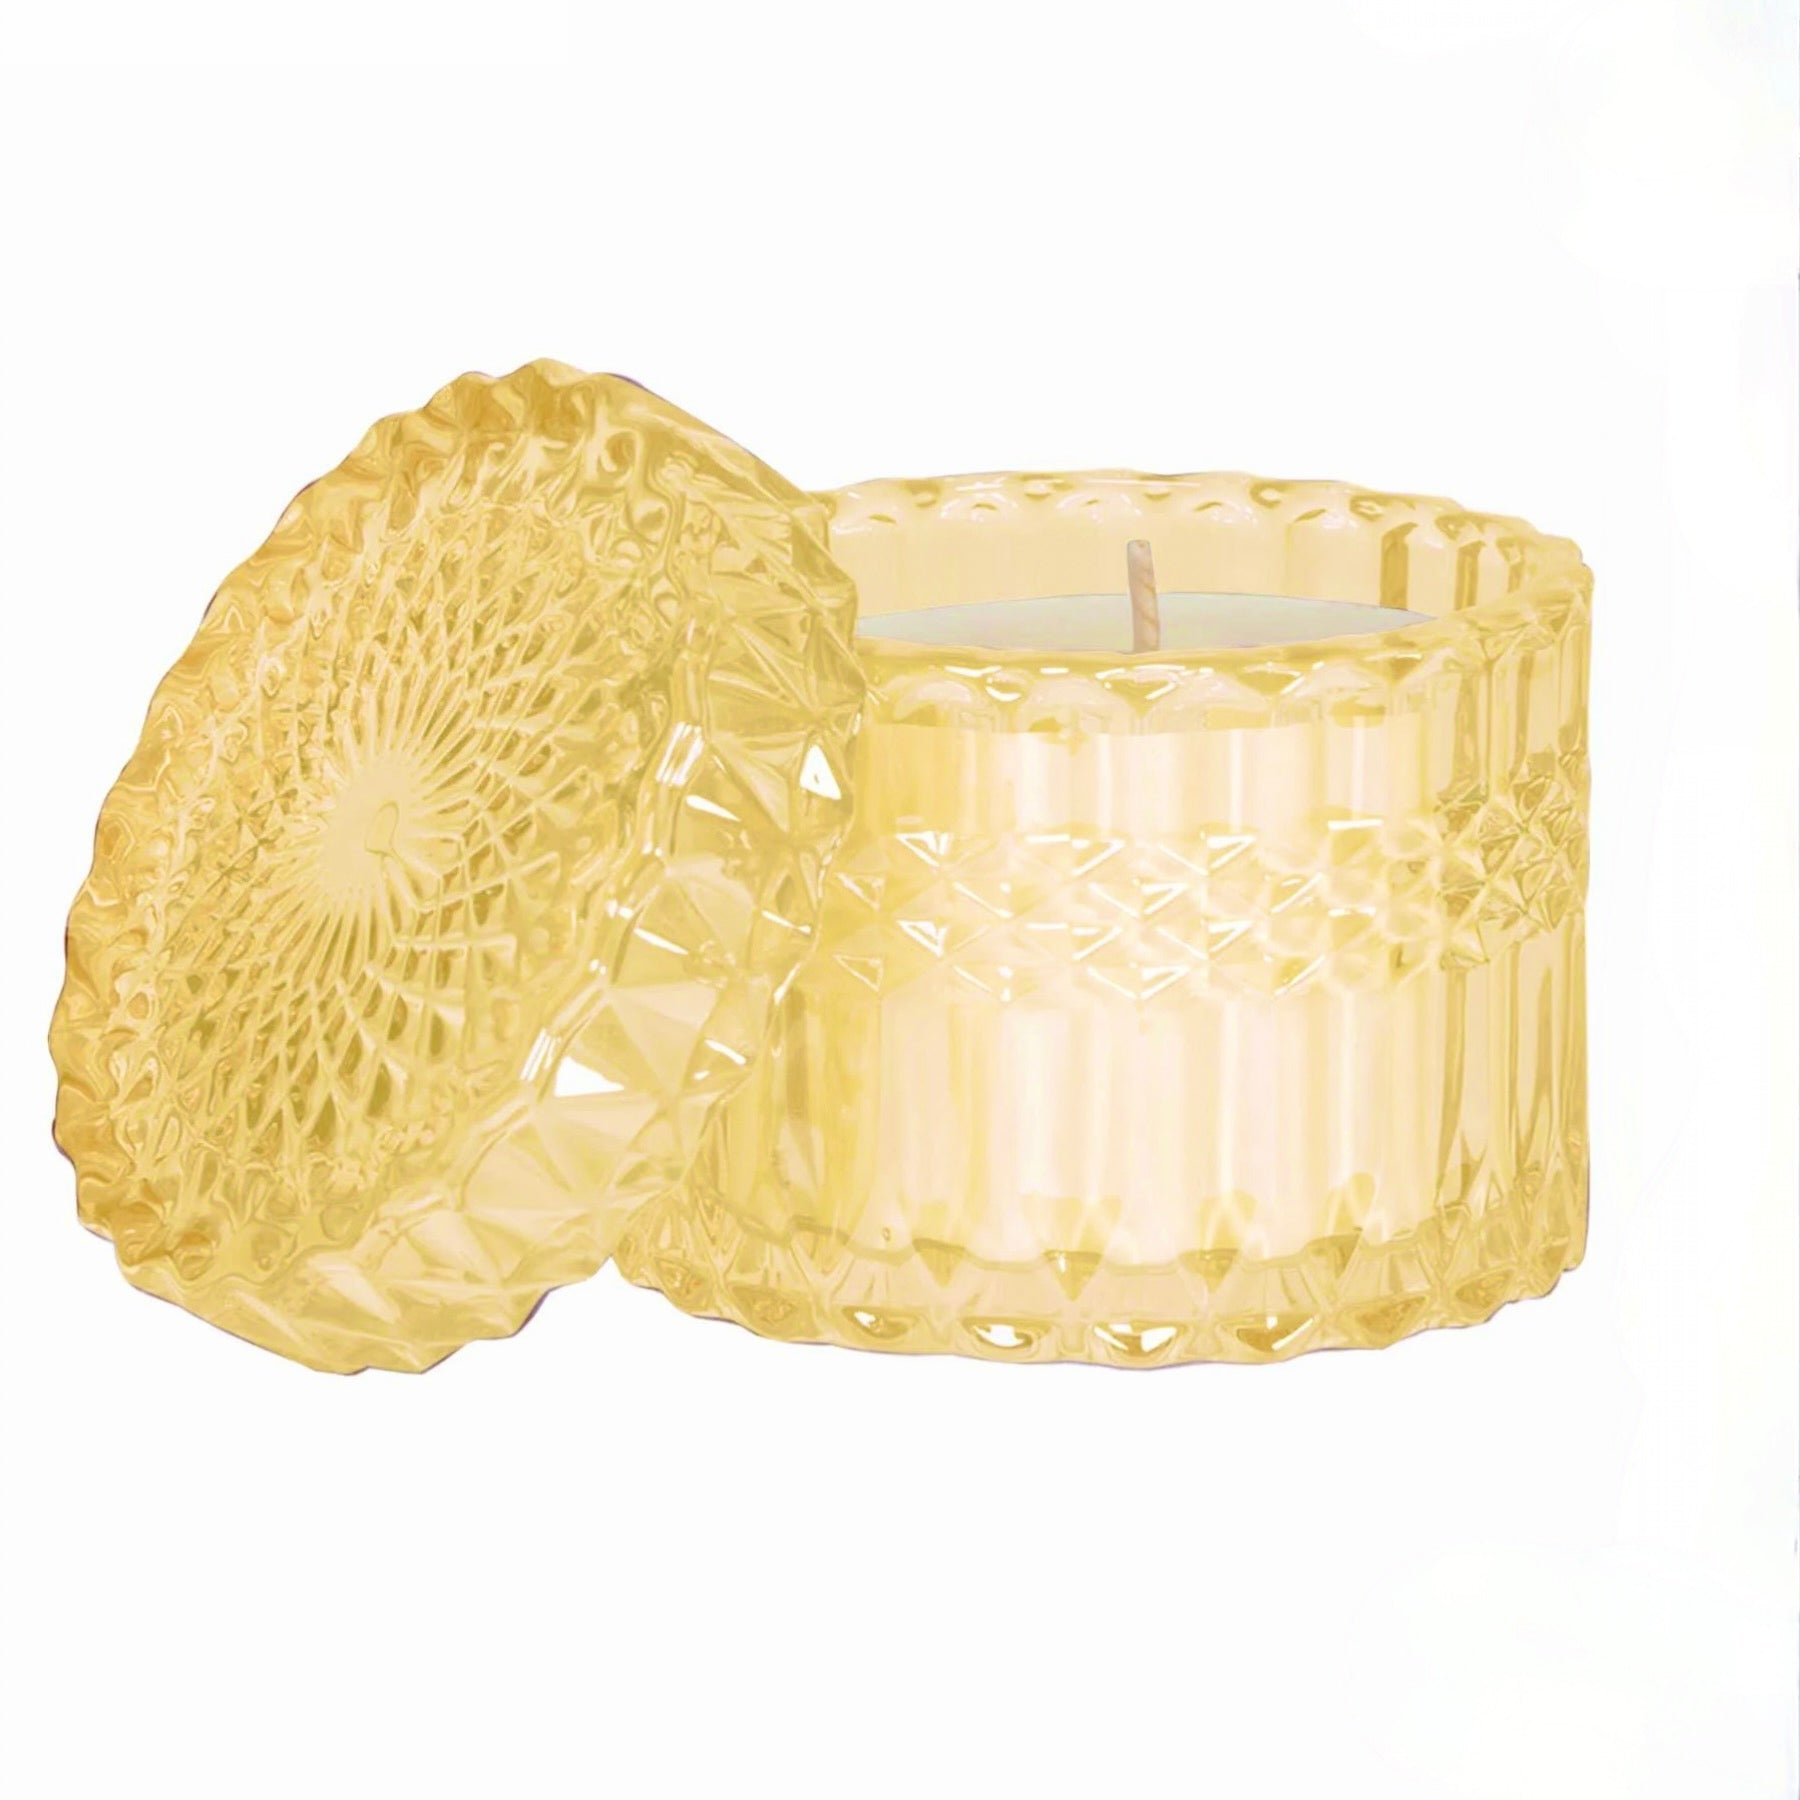 The SOi Company - Good Morning Sunshine Petite Shimmer Candle